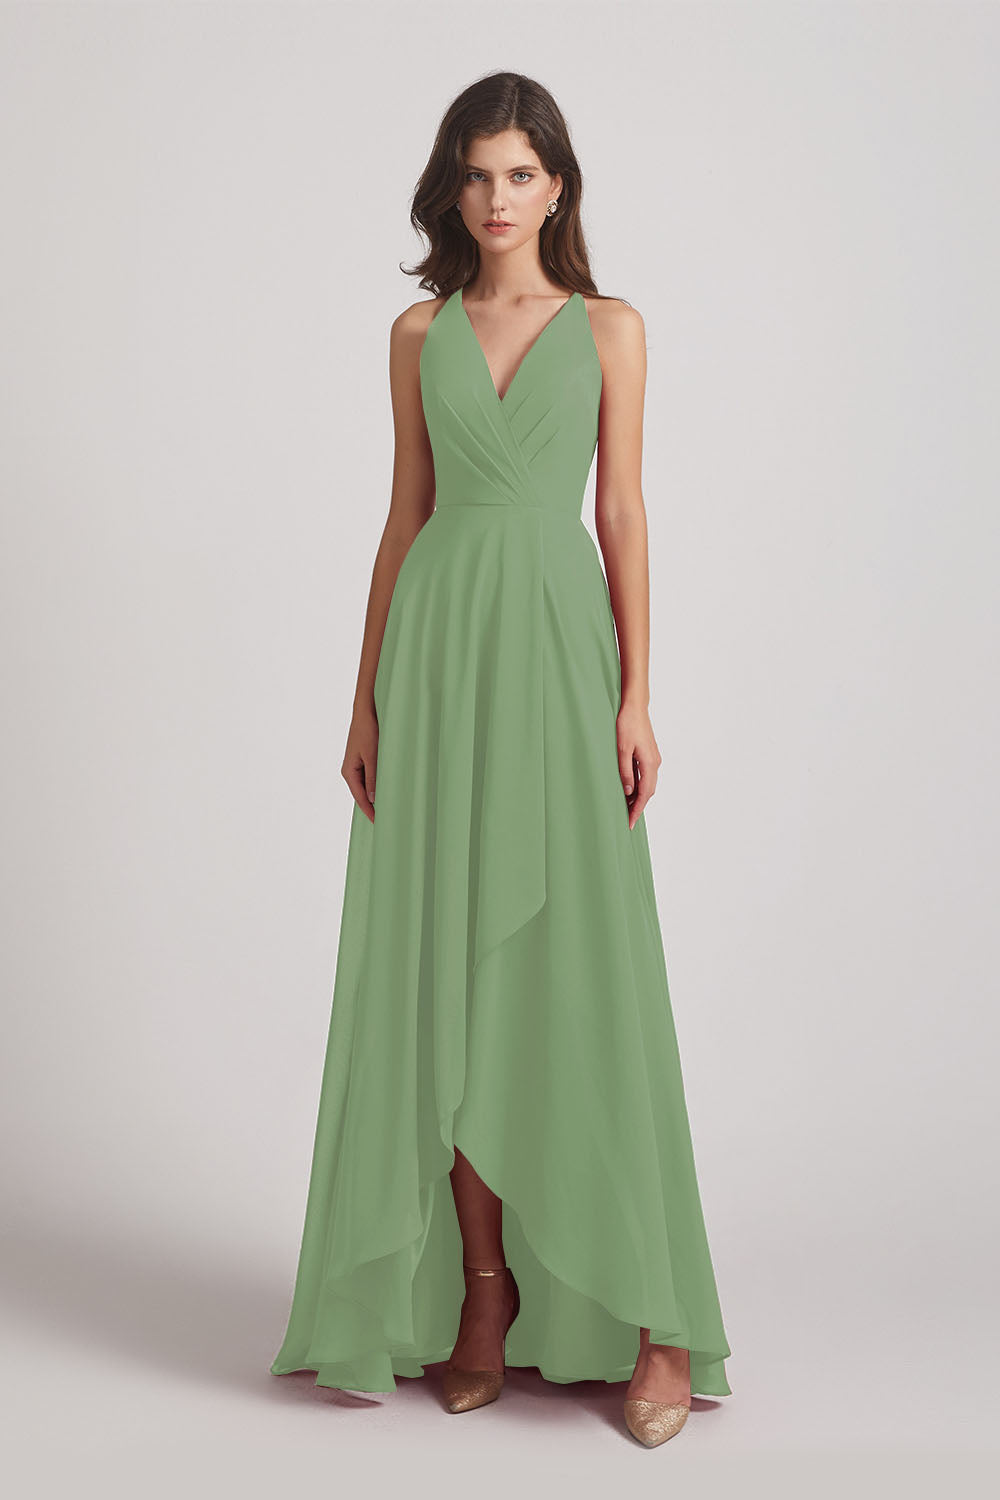 Alfa Bridal Seagrass Straps V-Neck Chiffon Country High Low Bridesmaid Dresses (AF0090)